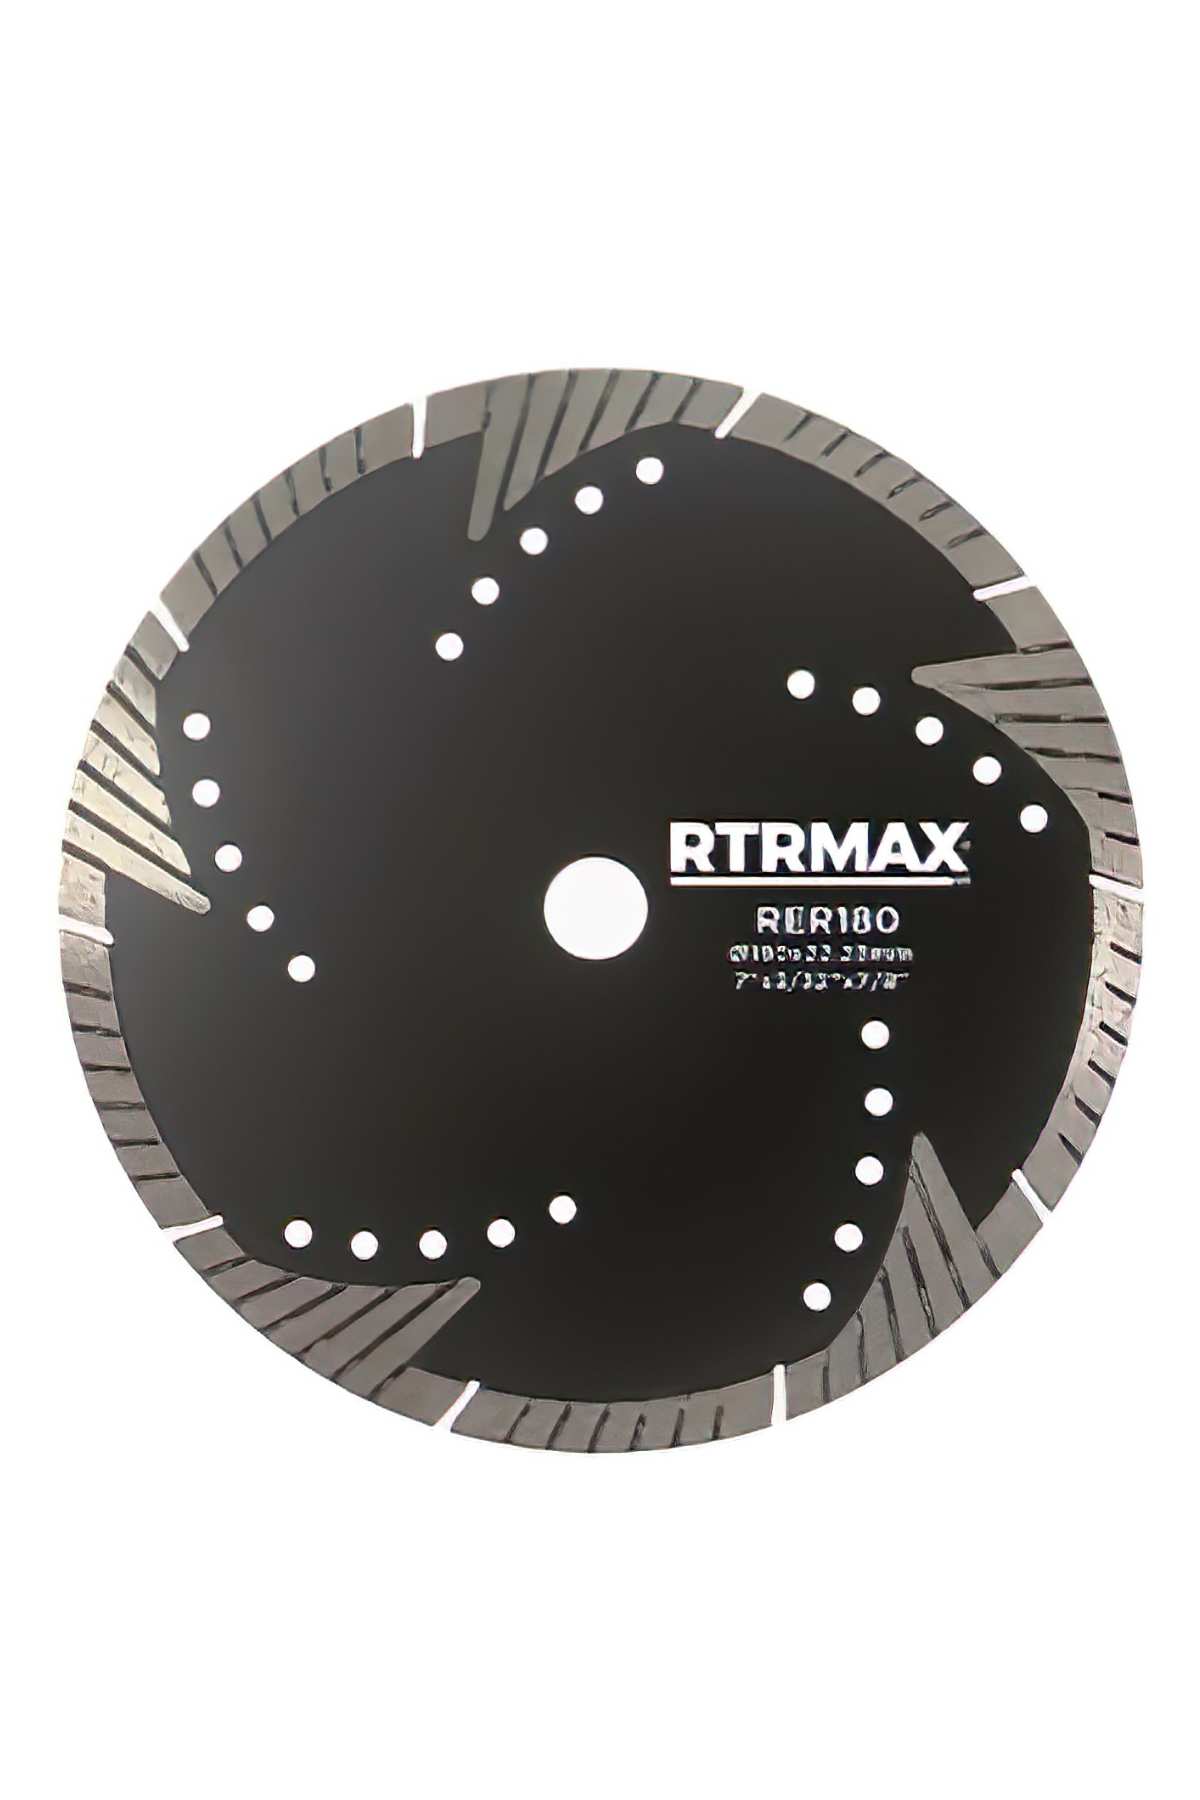 Rtrmax RER180 Turbo Parçalı Elmas Kesme Diski 180 MM